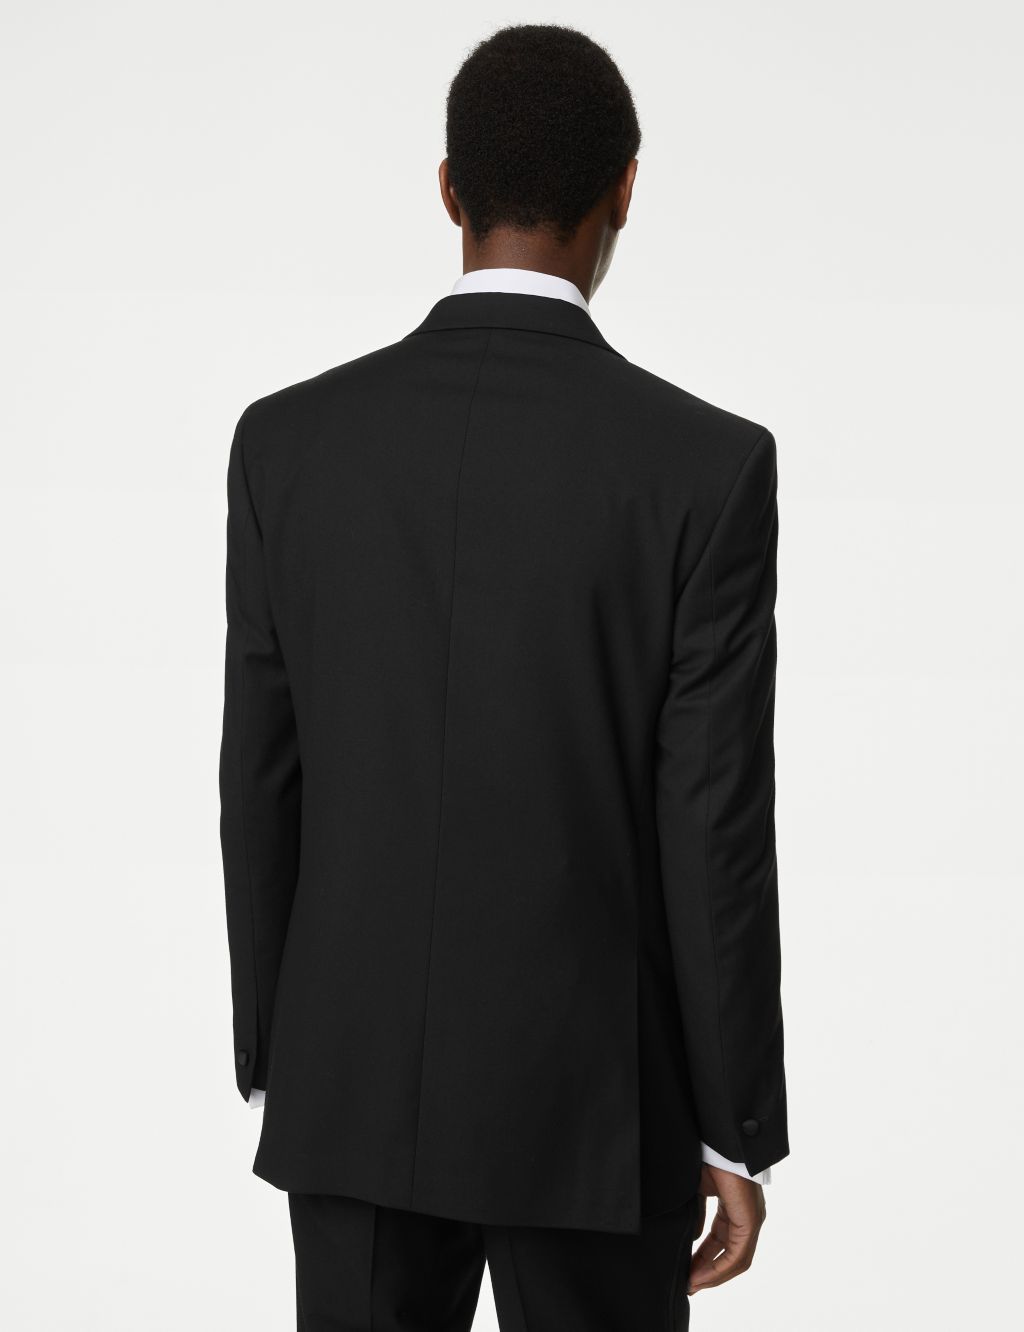 Regular Fit Stretch Tuxedo Suit image 3